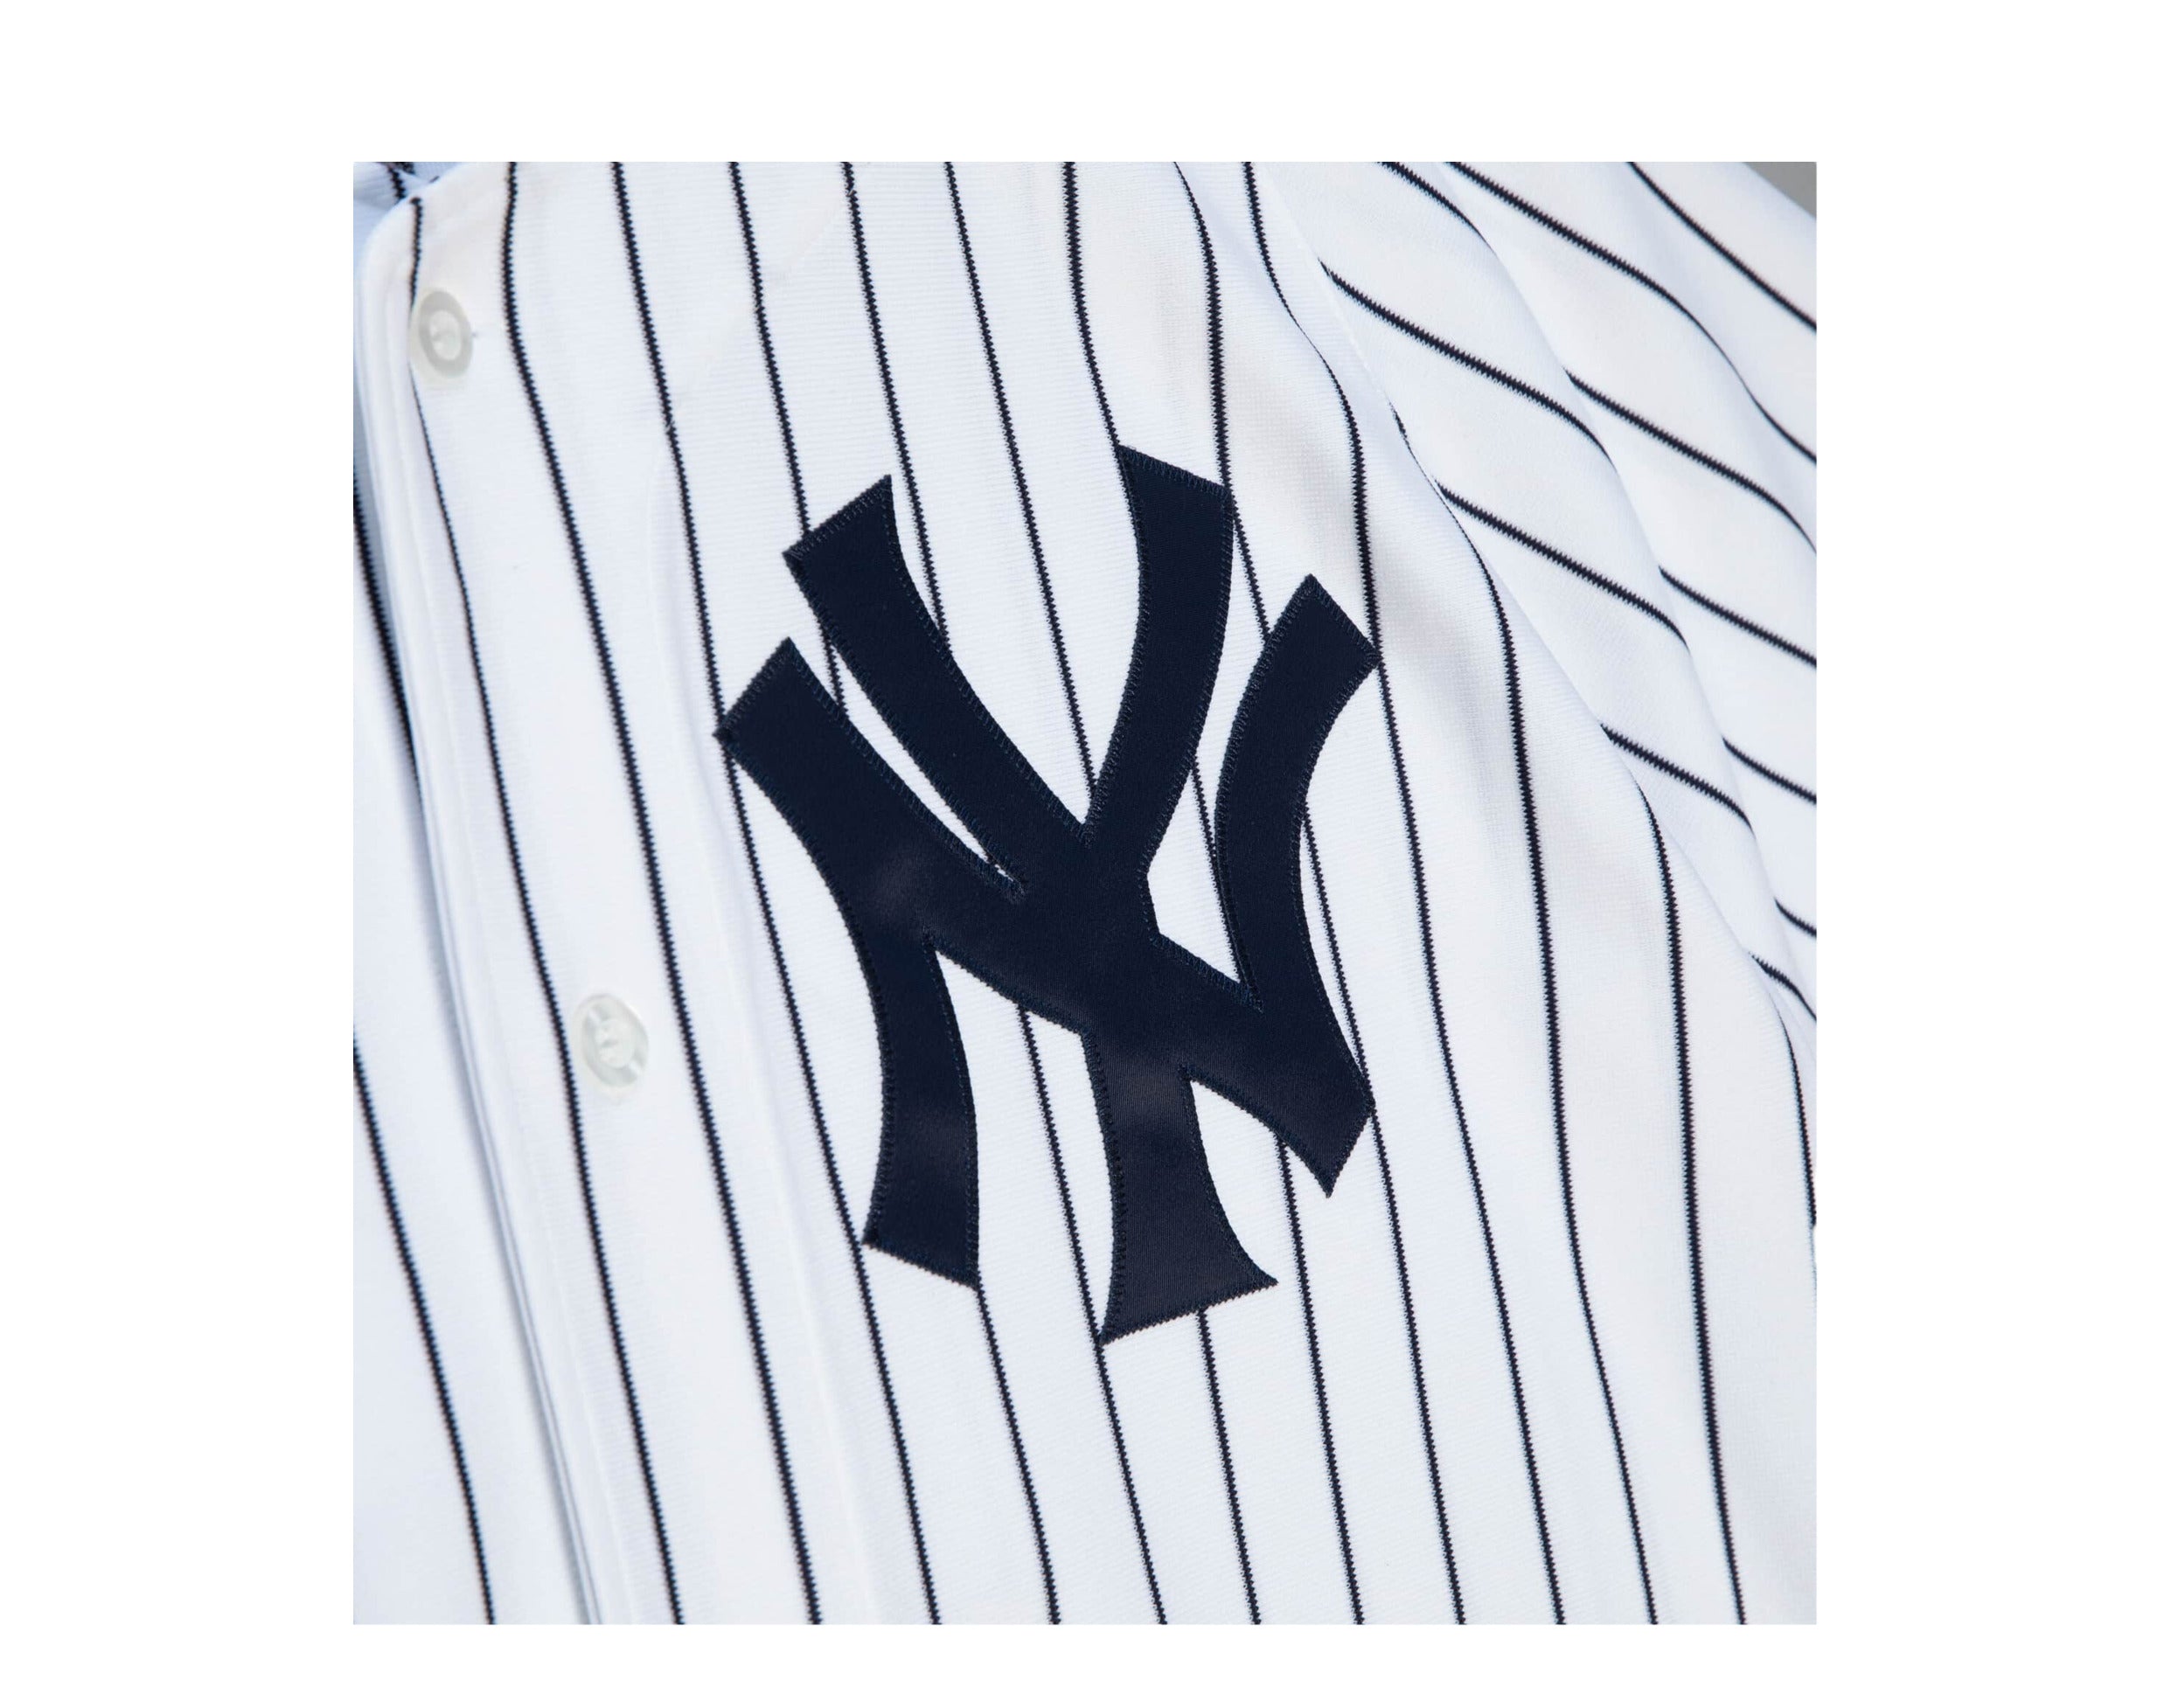 Mitchell & Ness Authentic Derek Jeter New York Yankees Home 1997 Jersey